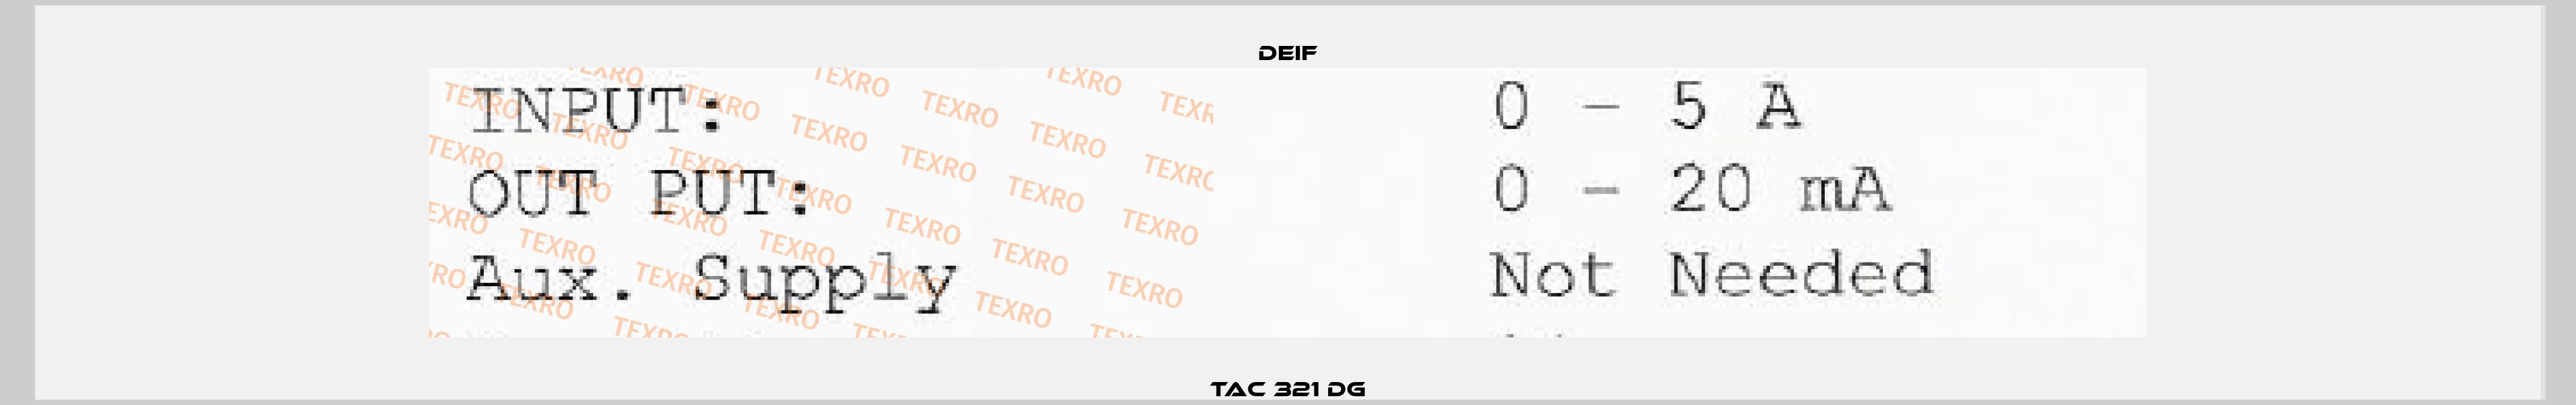 TAC 321 DG Deif